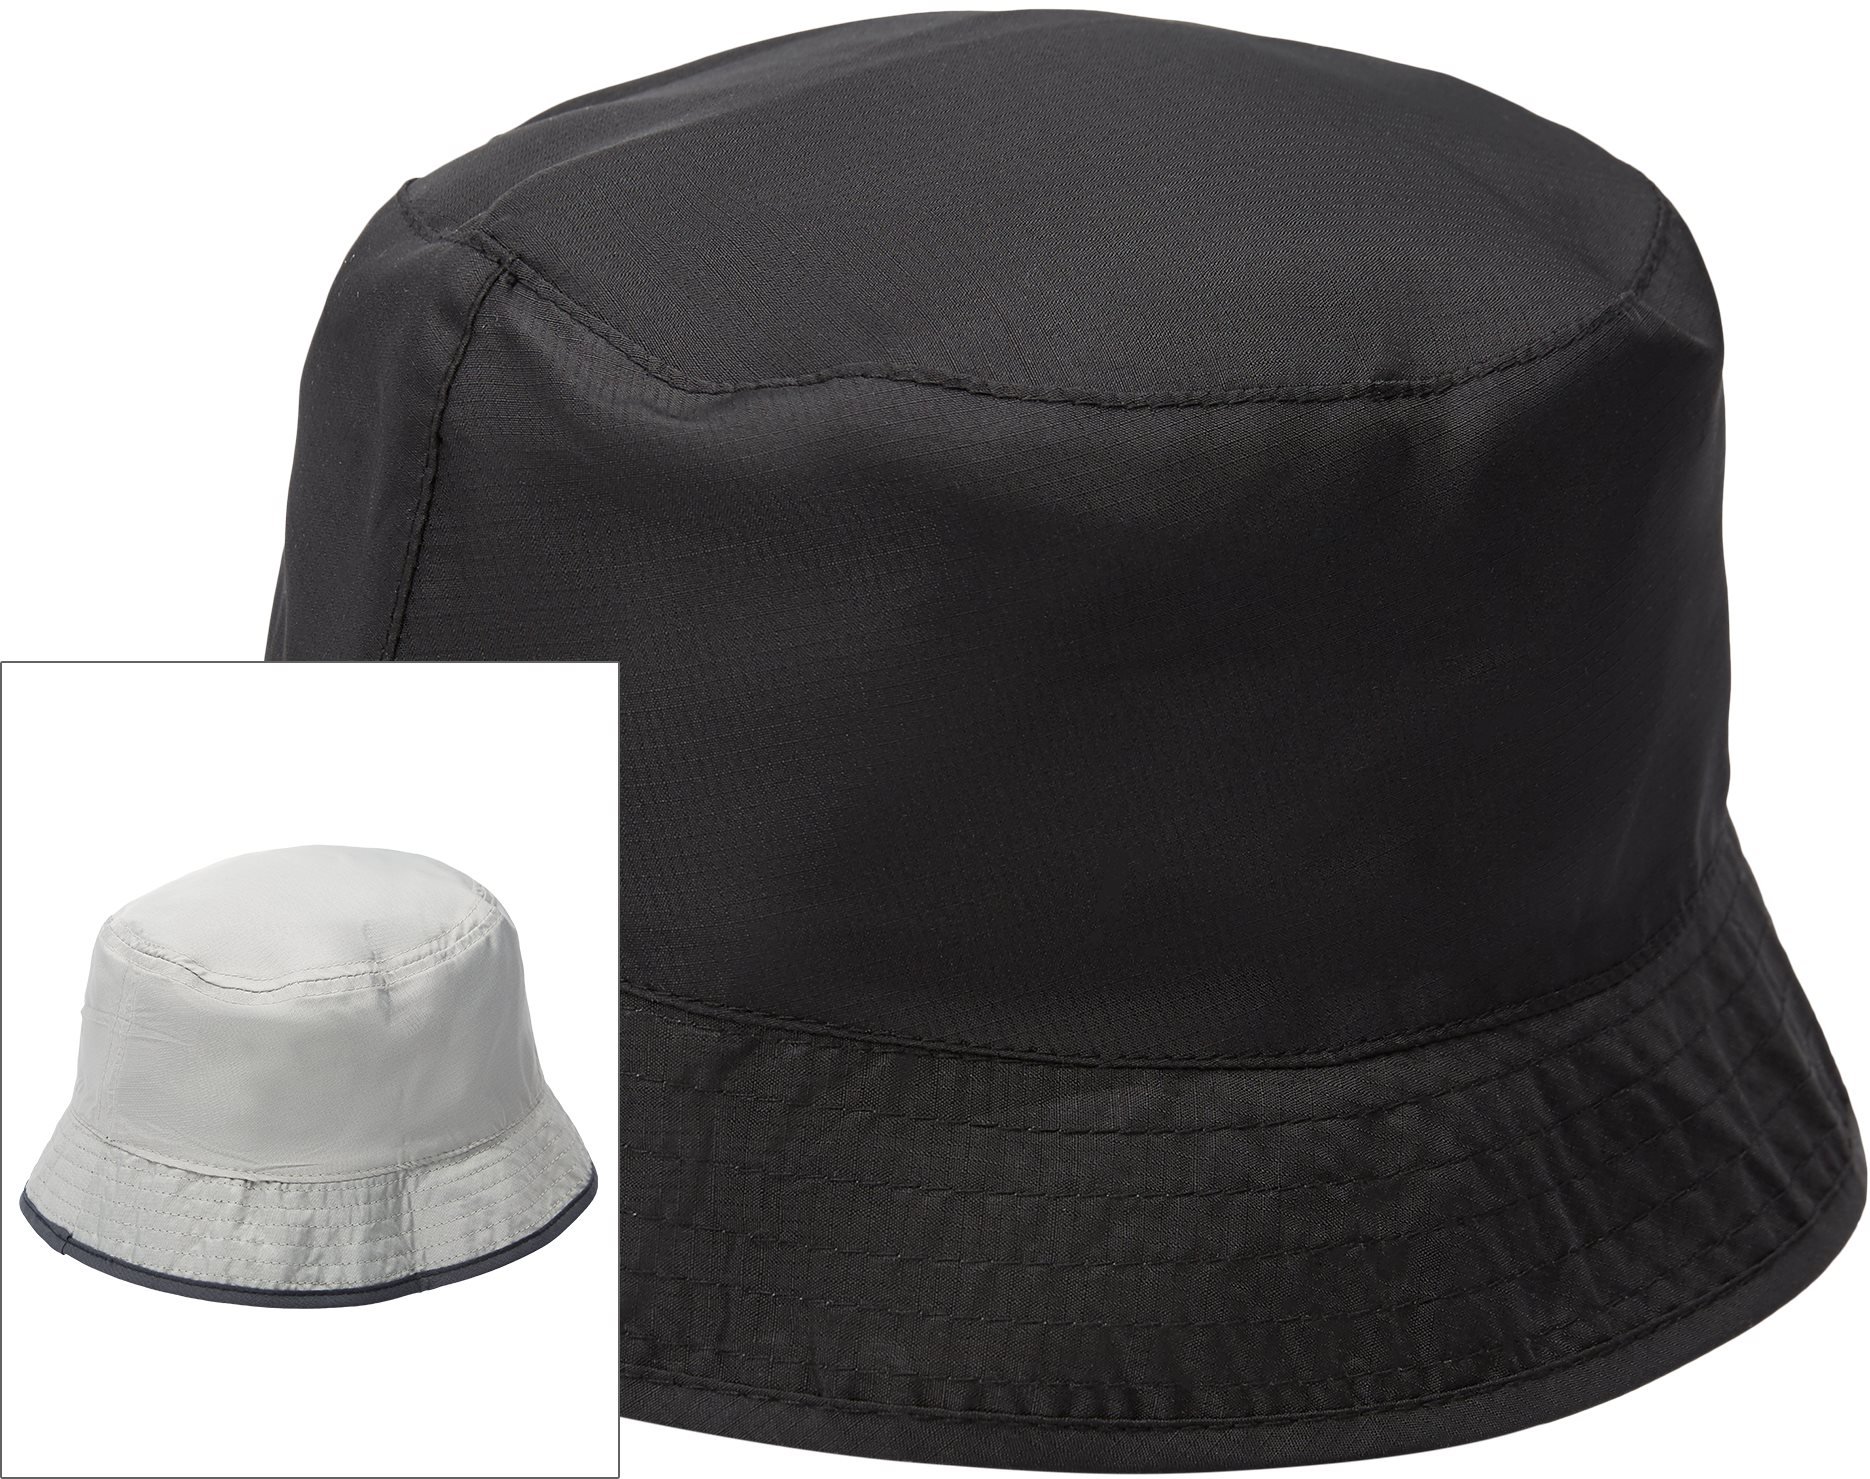 qUINT Hats NYLON POCKET Black